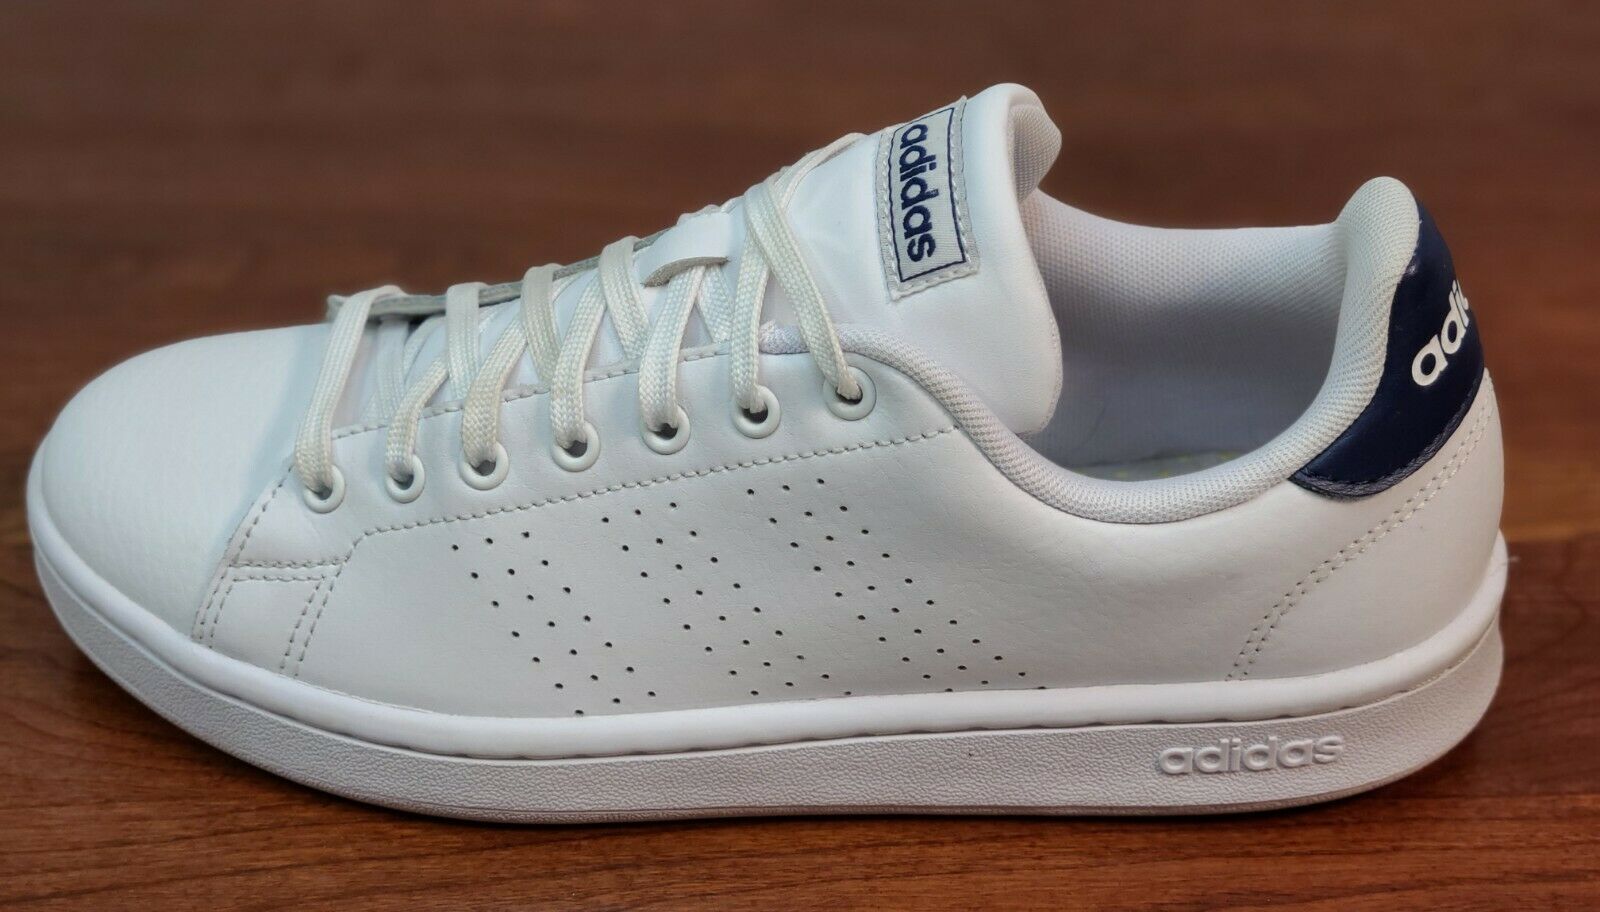 Adidas Men's Advantage Sneaker Athletic Shoes Size 8 White, Blue F36423